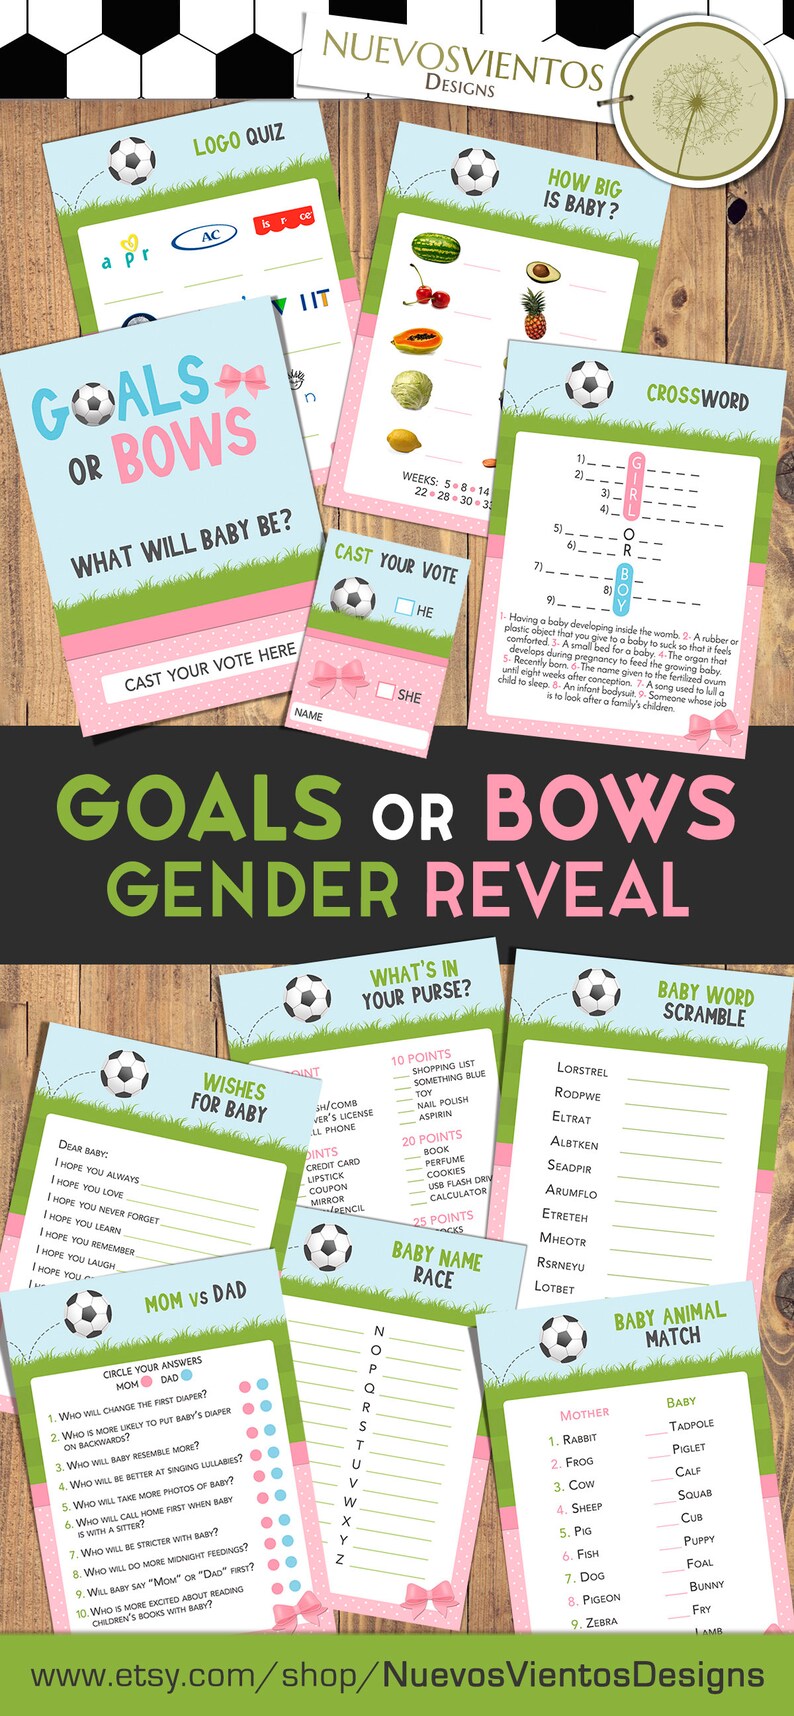 Juegos de revelación de género de Goals o Bows imprimibles, descarga instantánea del paquete de revelación de género de fútbol imagen 5